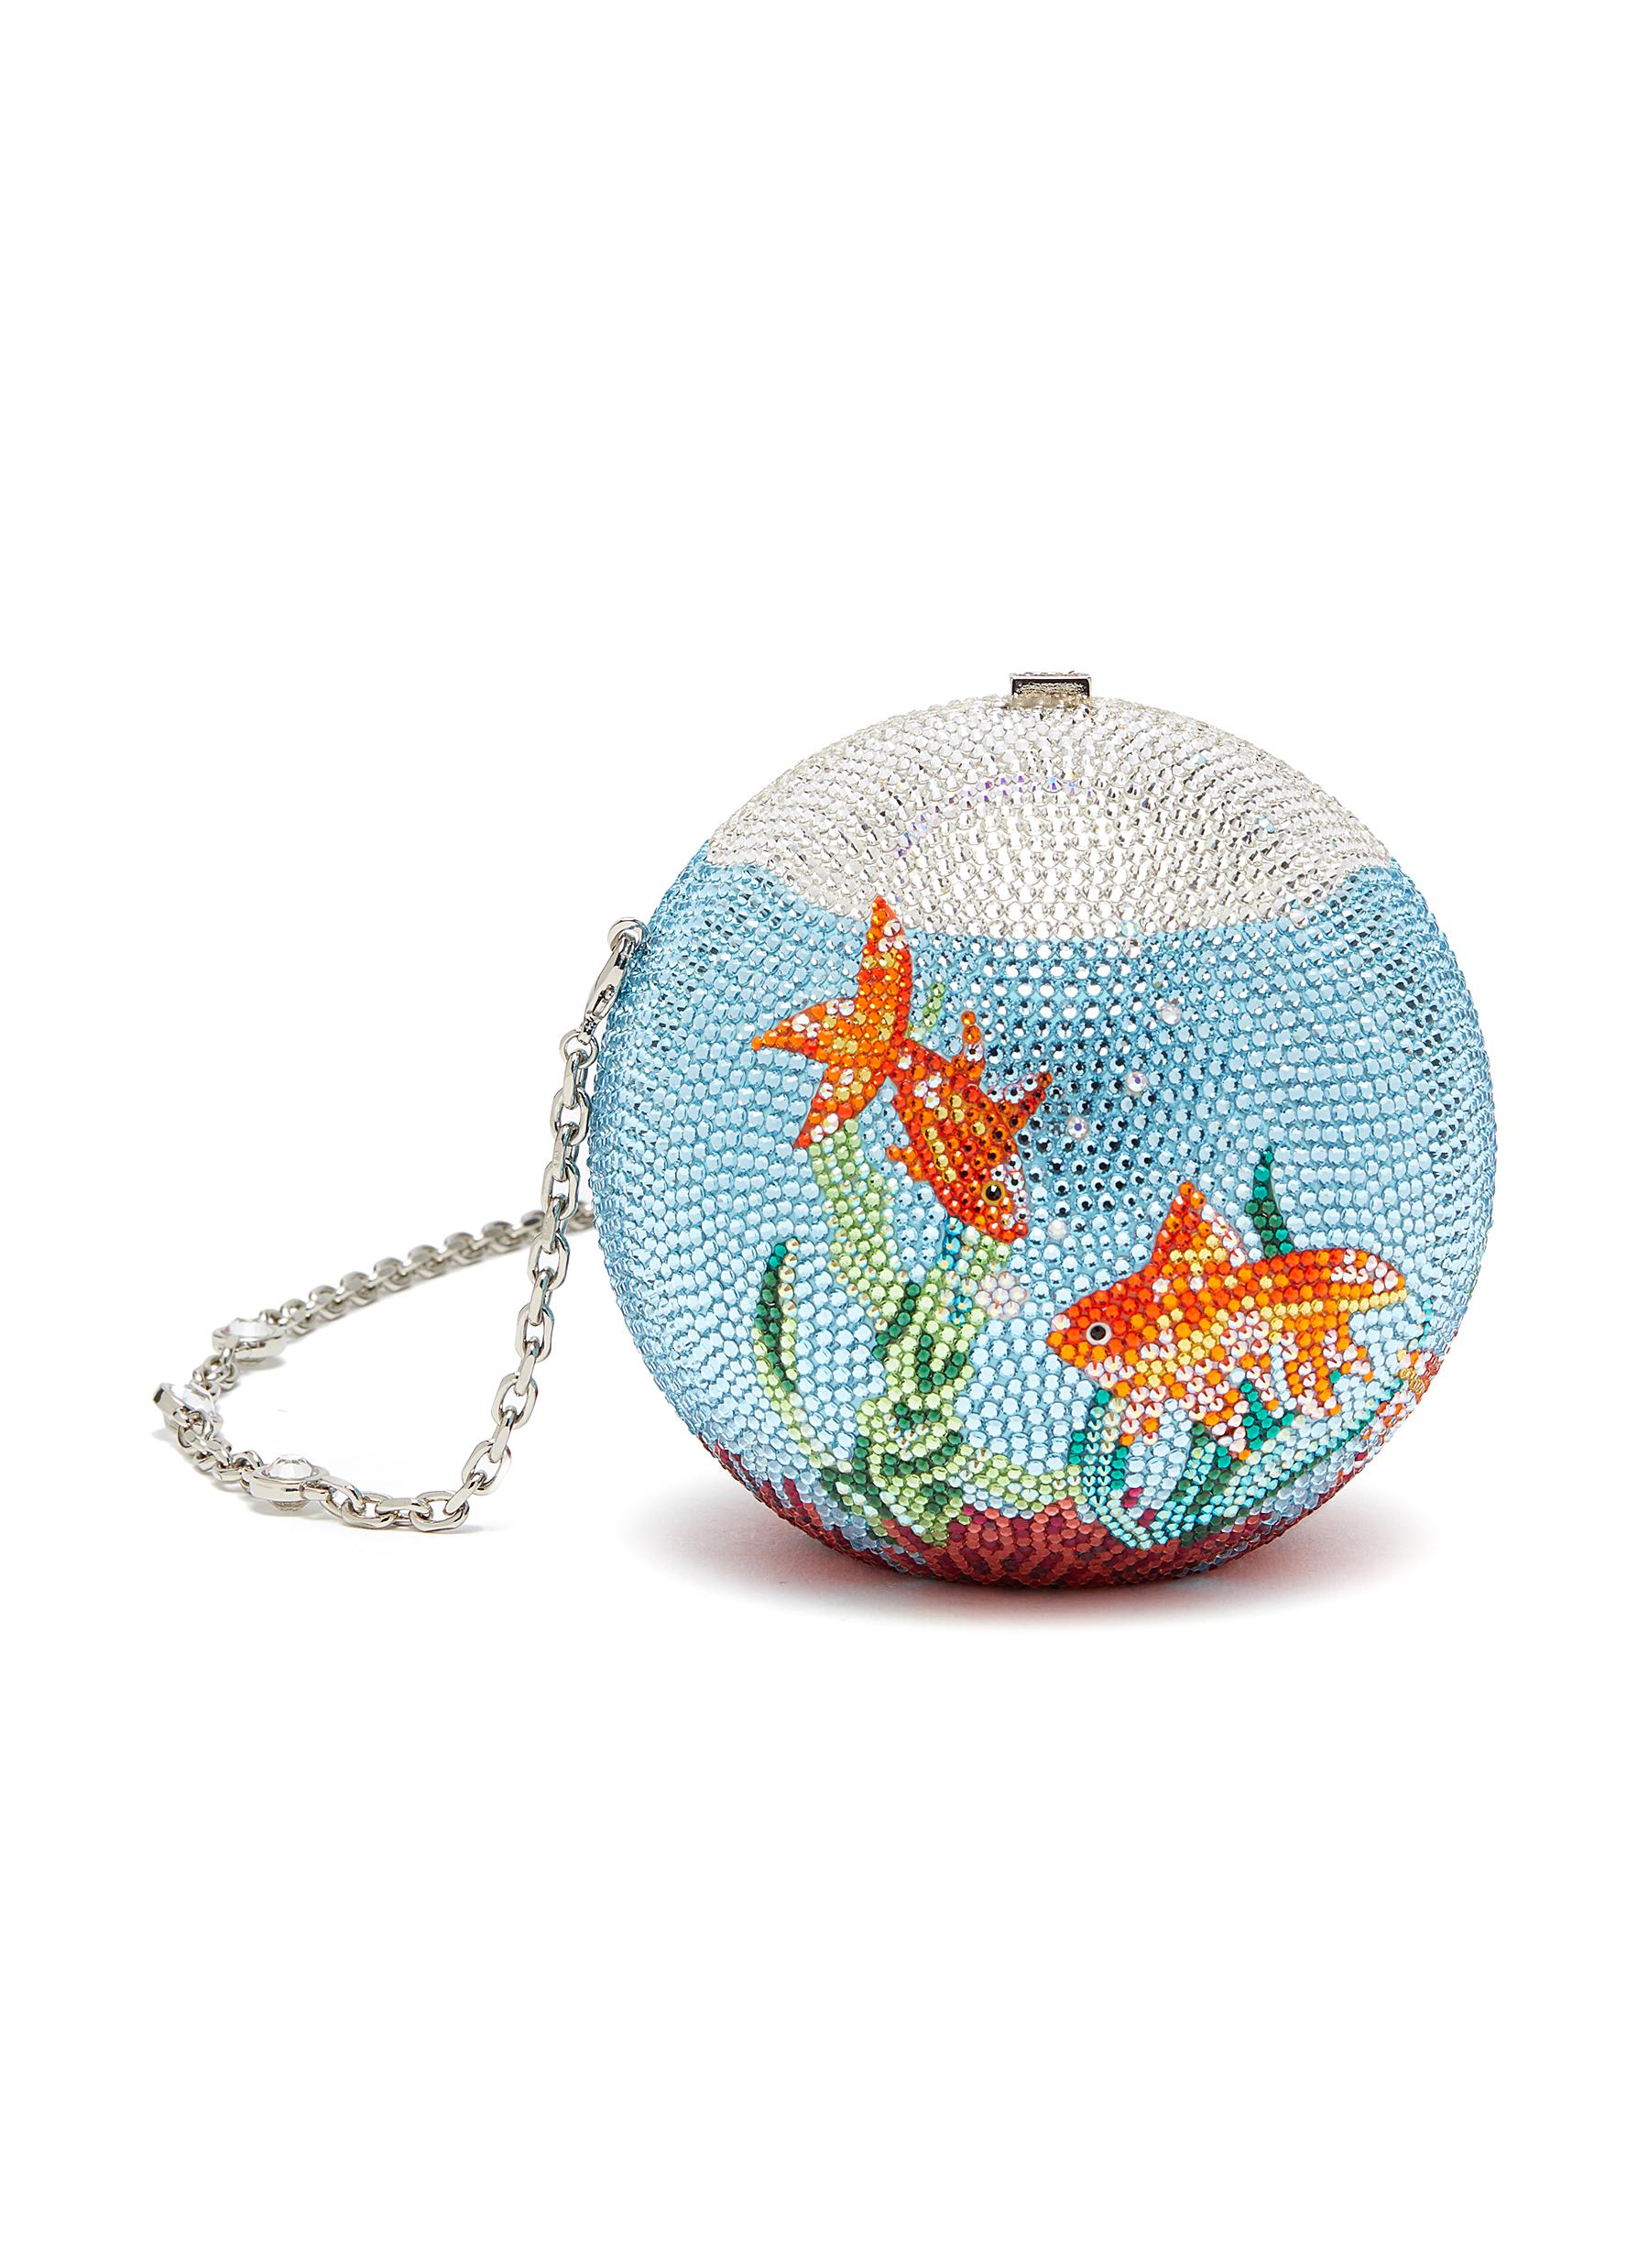 Sphere Goldfish Bowl Clutch Bag